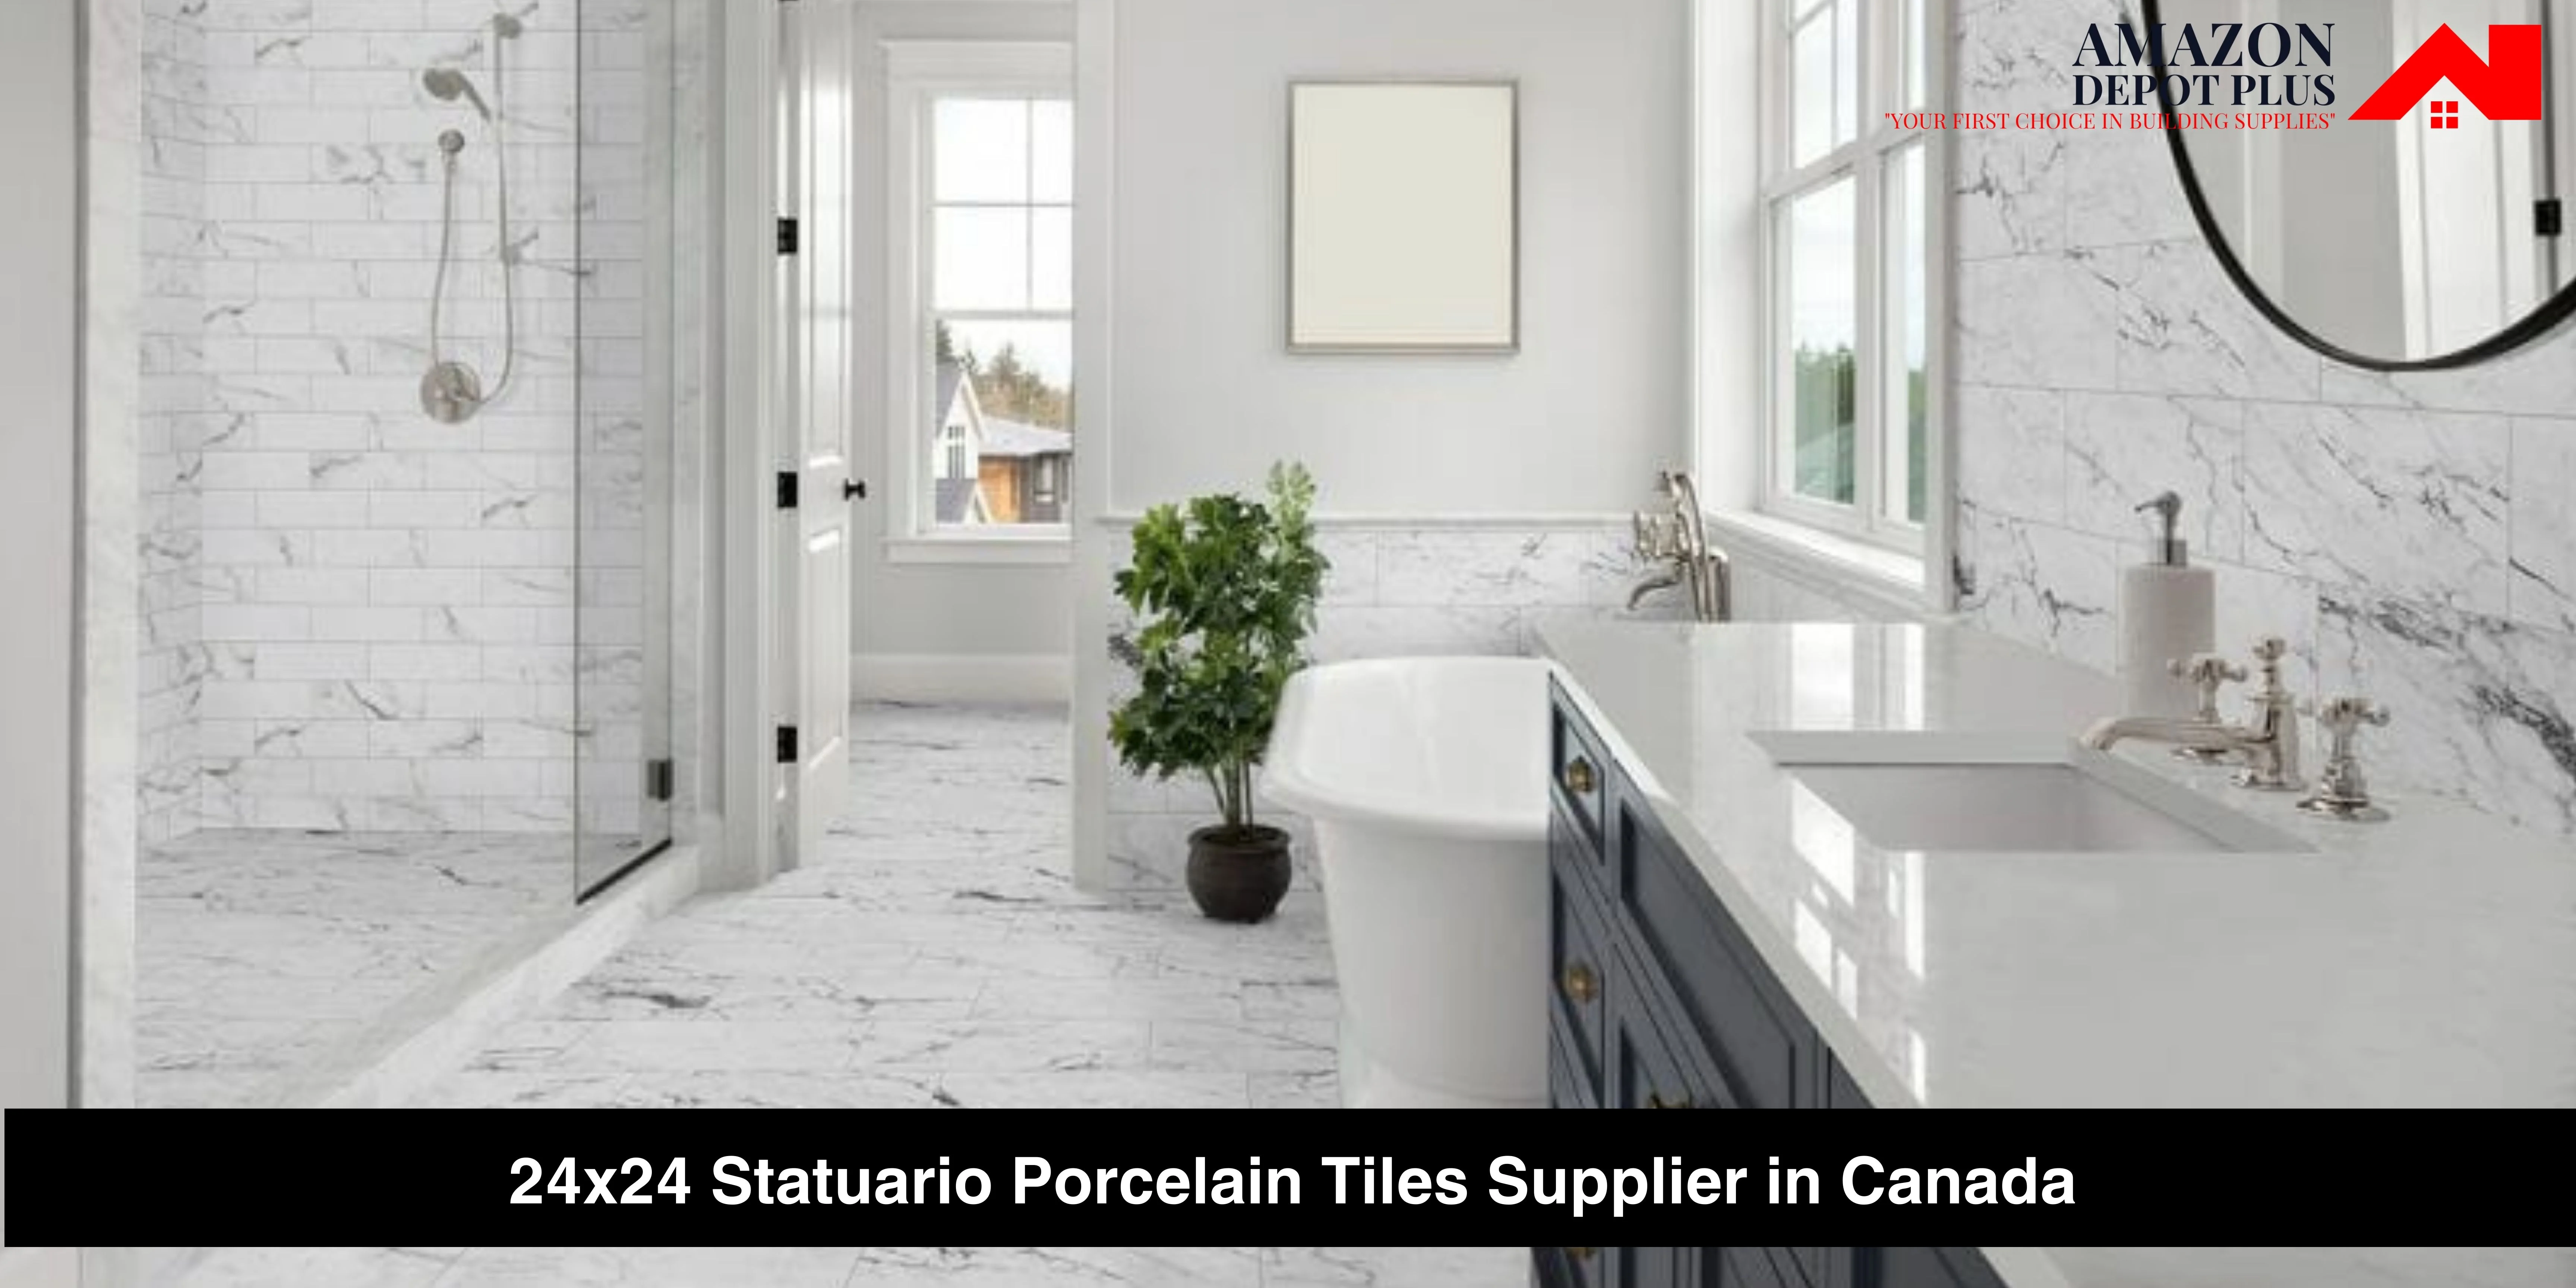 24x24 Statuario Porcelain Tiles Supplier in Canada